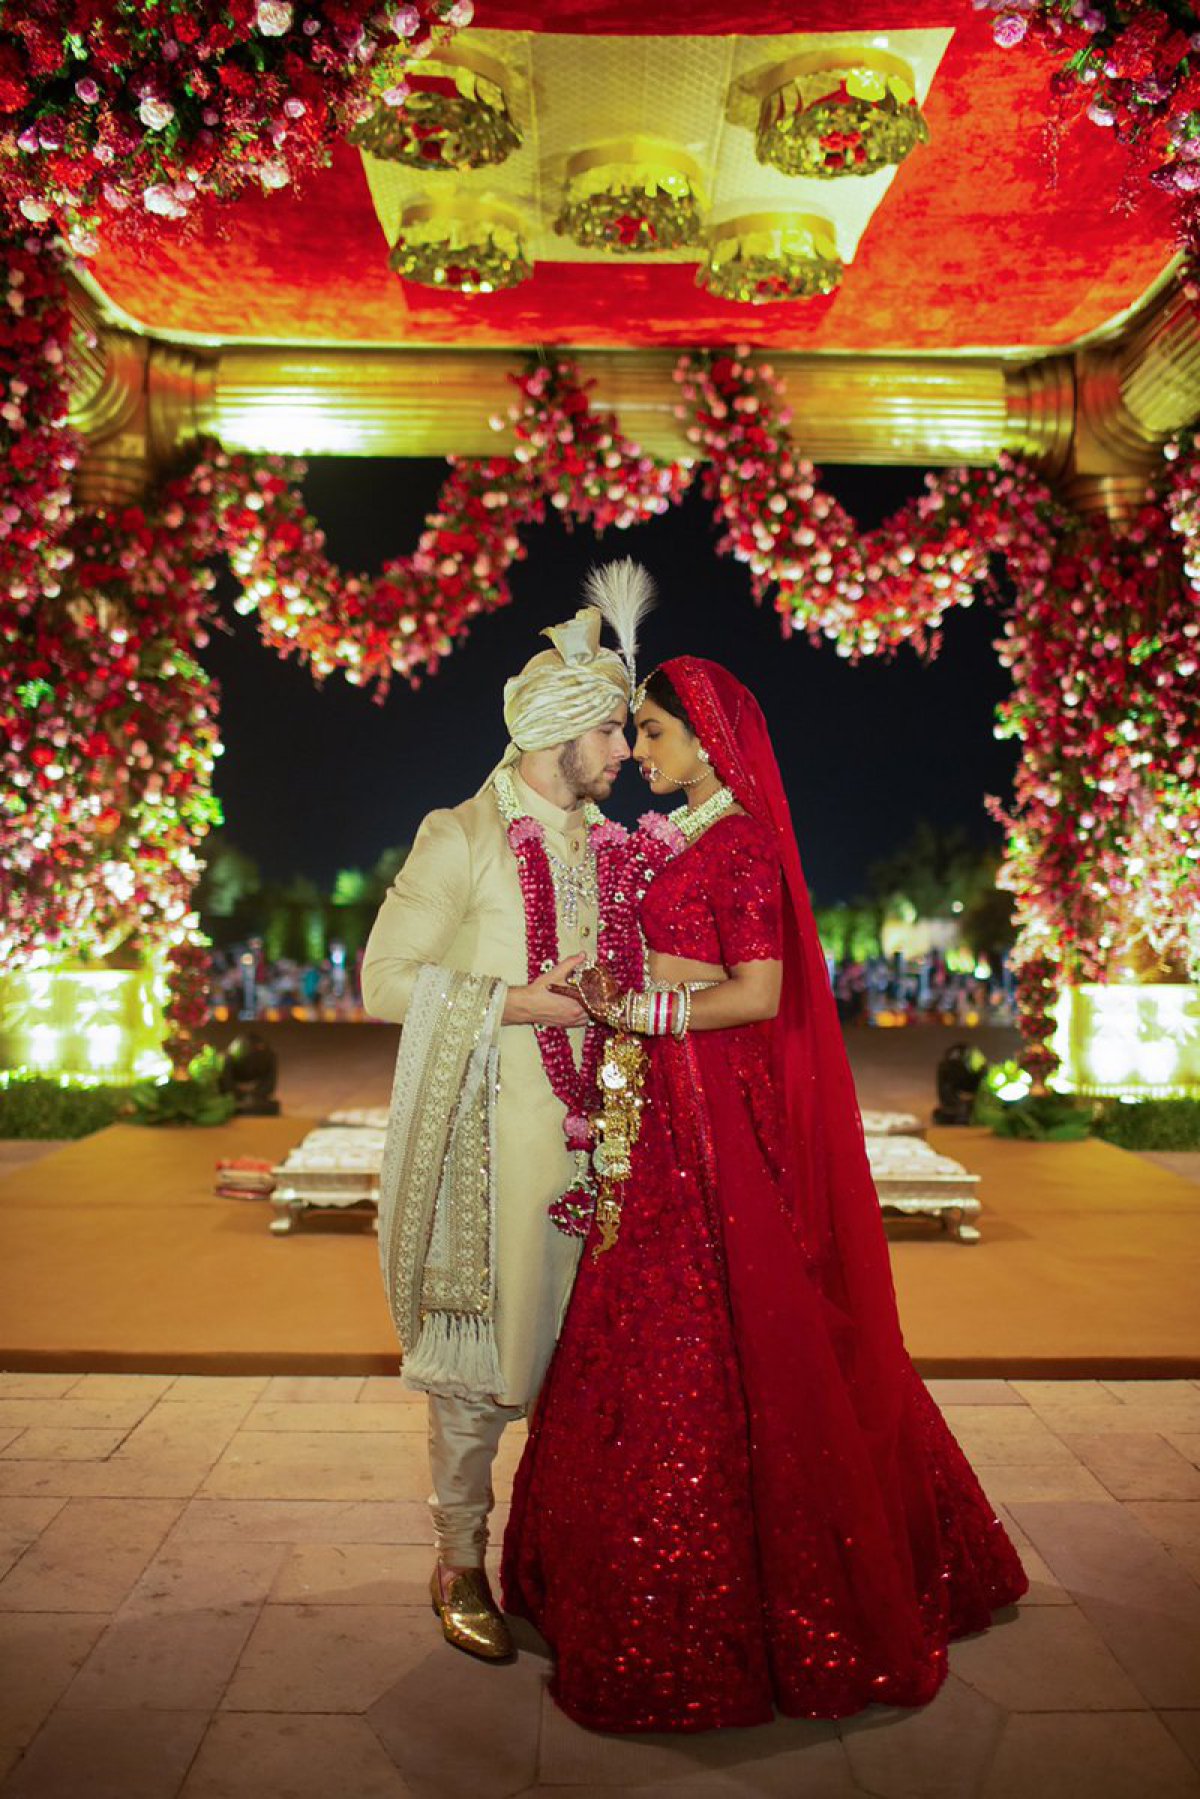 La espectacular boda de Nick Jonas y Priyanka Chopra